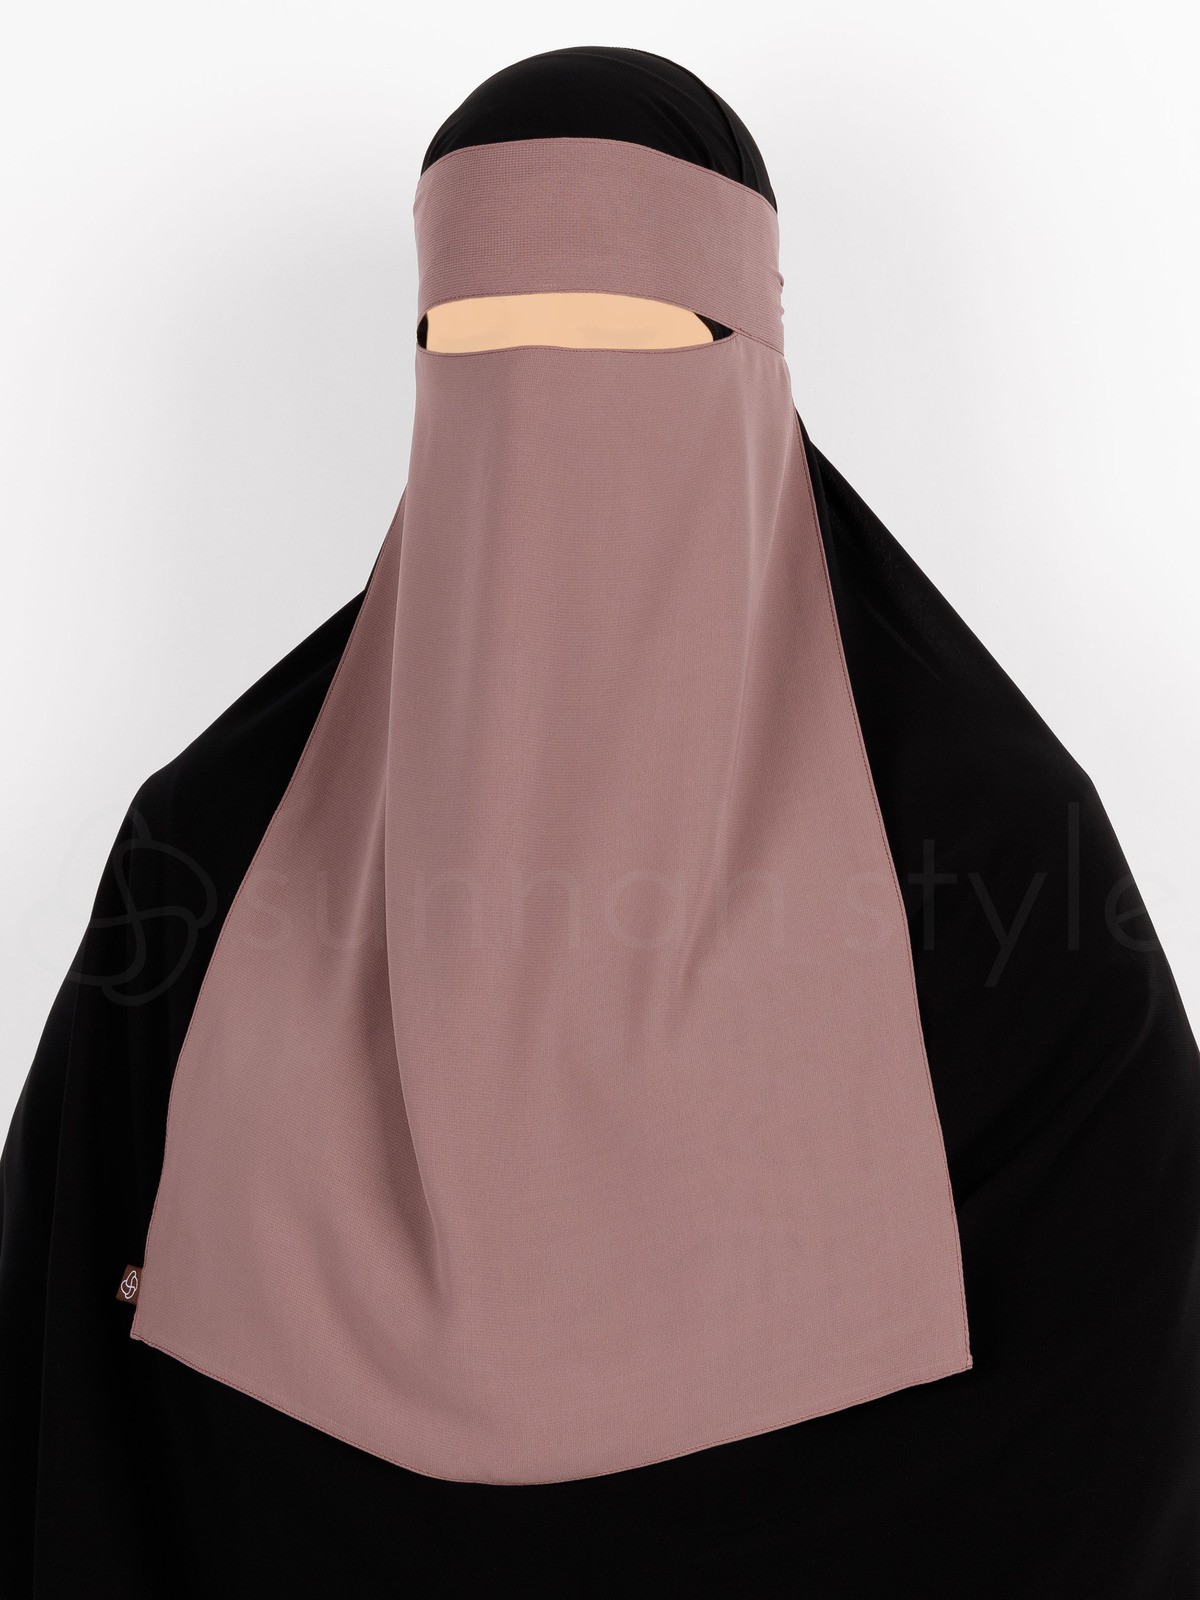 Sunnah Style - One Layer Niqab (Twilight Mauve)